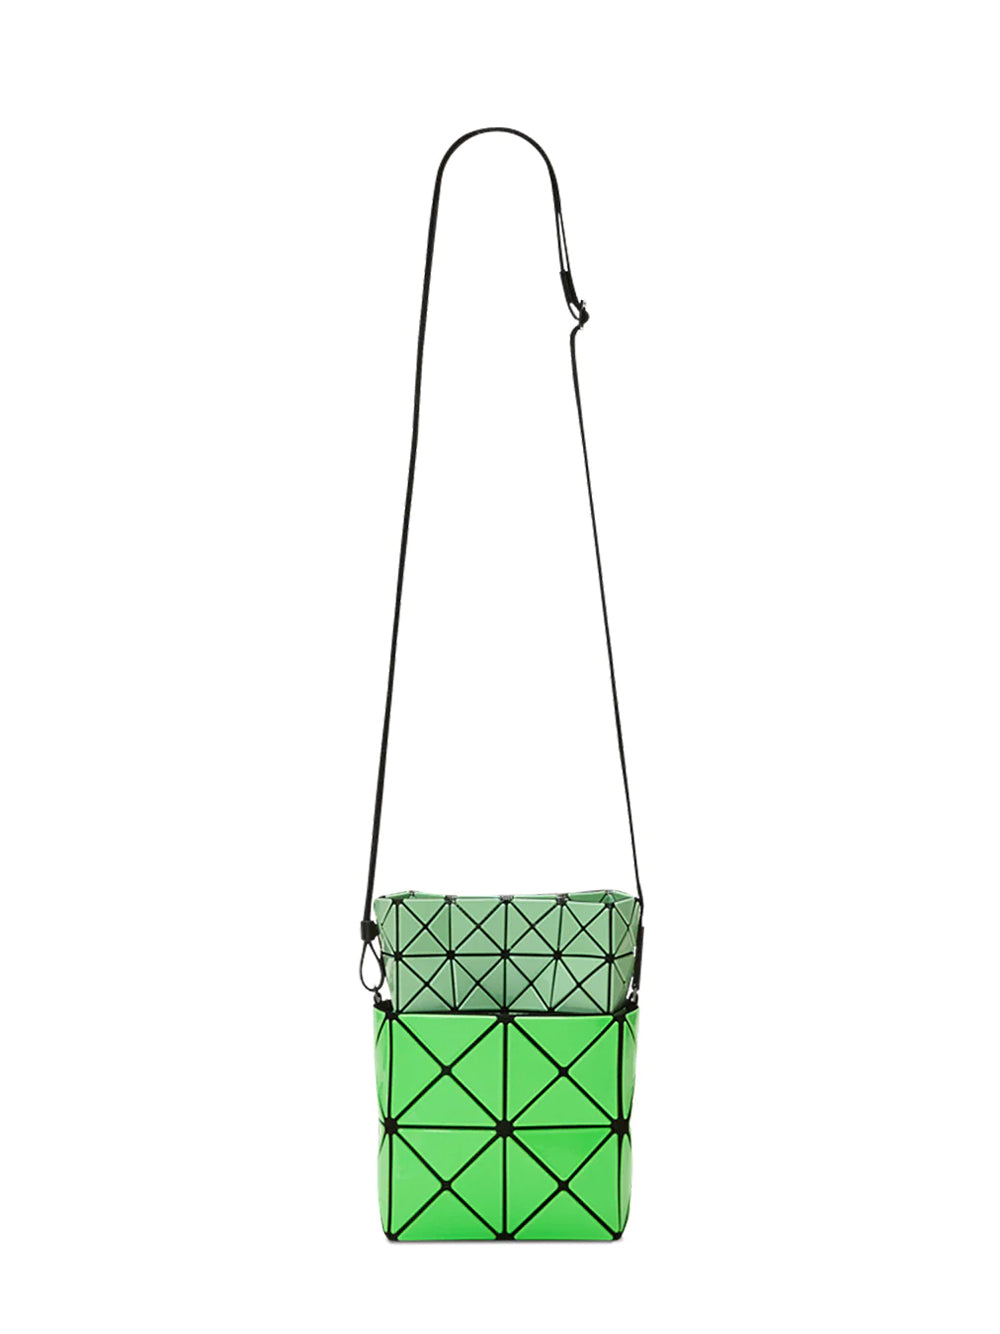 LUCENT NEST Shoulder Bag (Light Green & Blue Green)